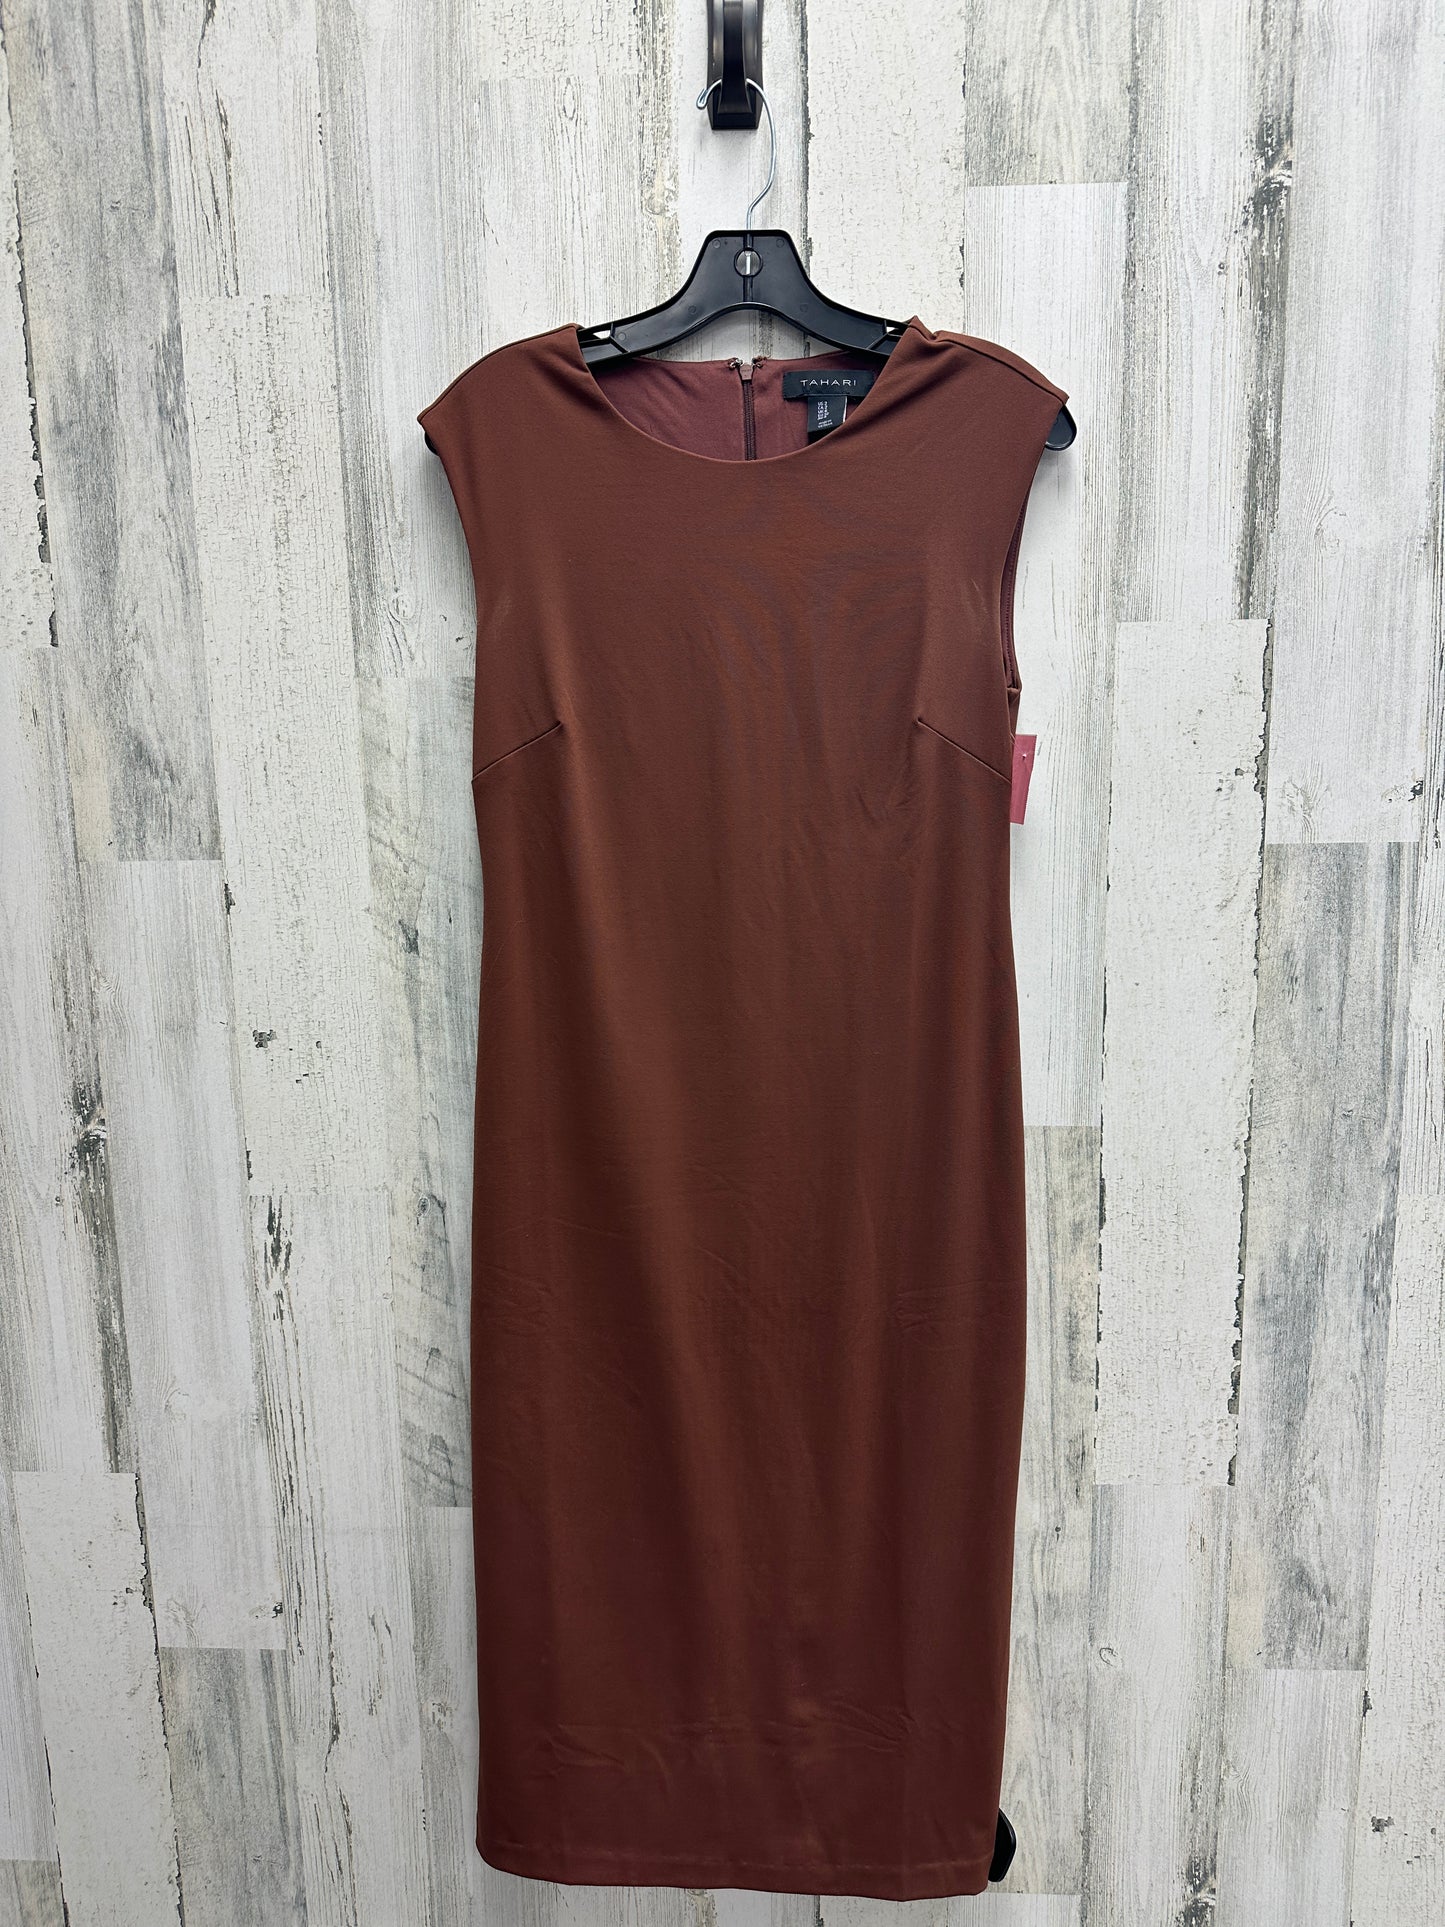 Dress Casual Short By Tahari  Size: Xs